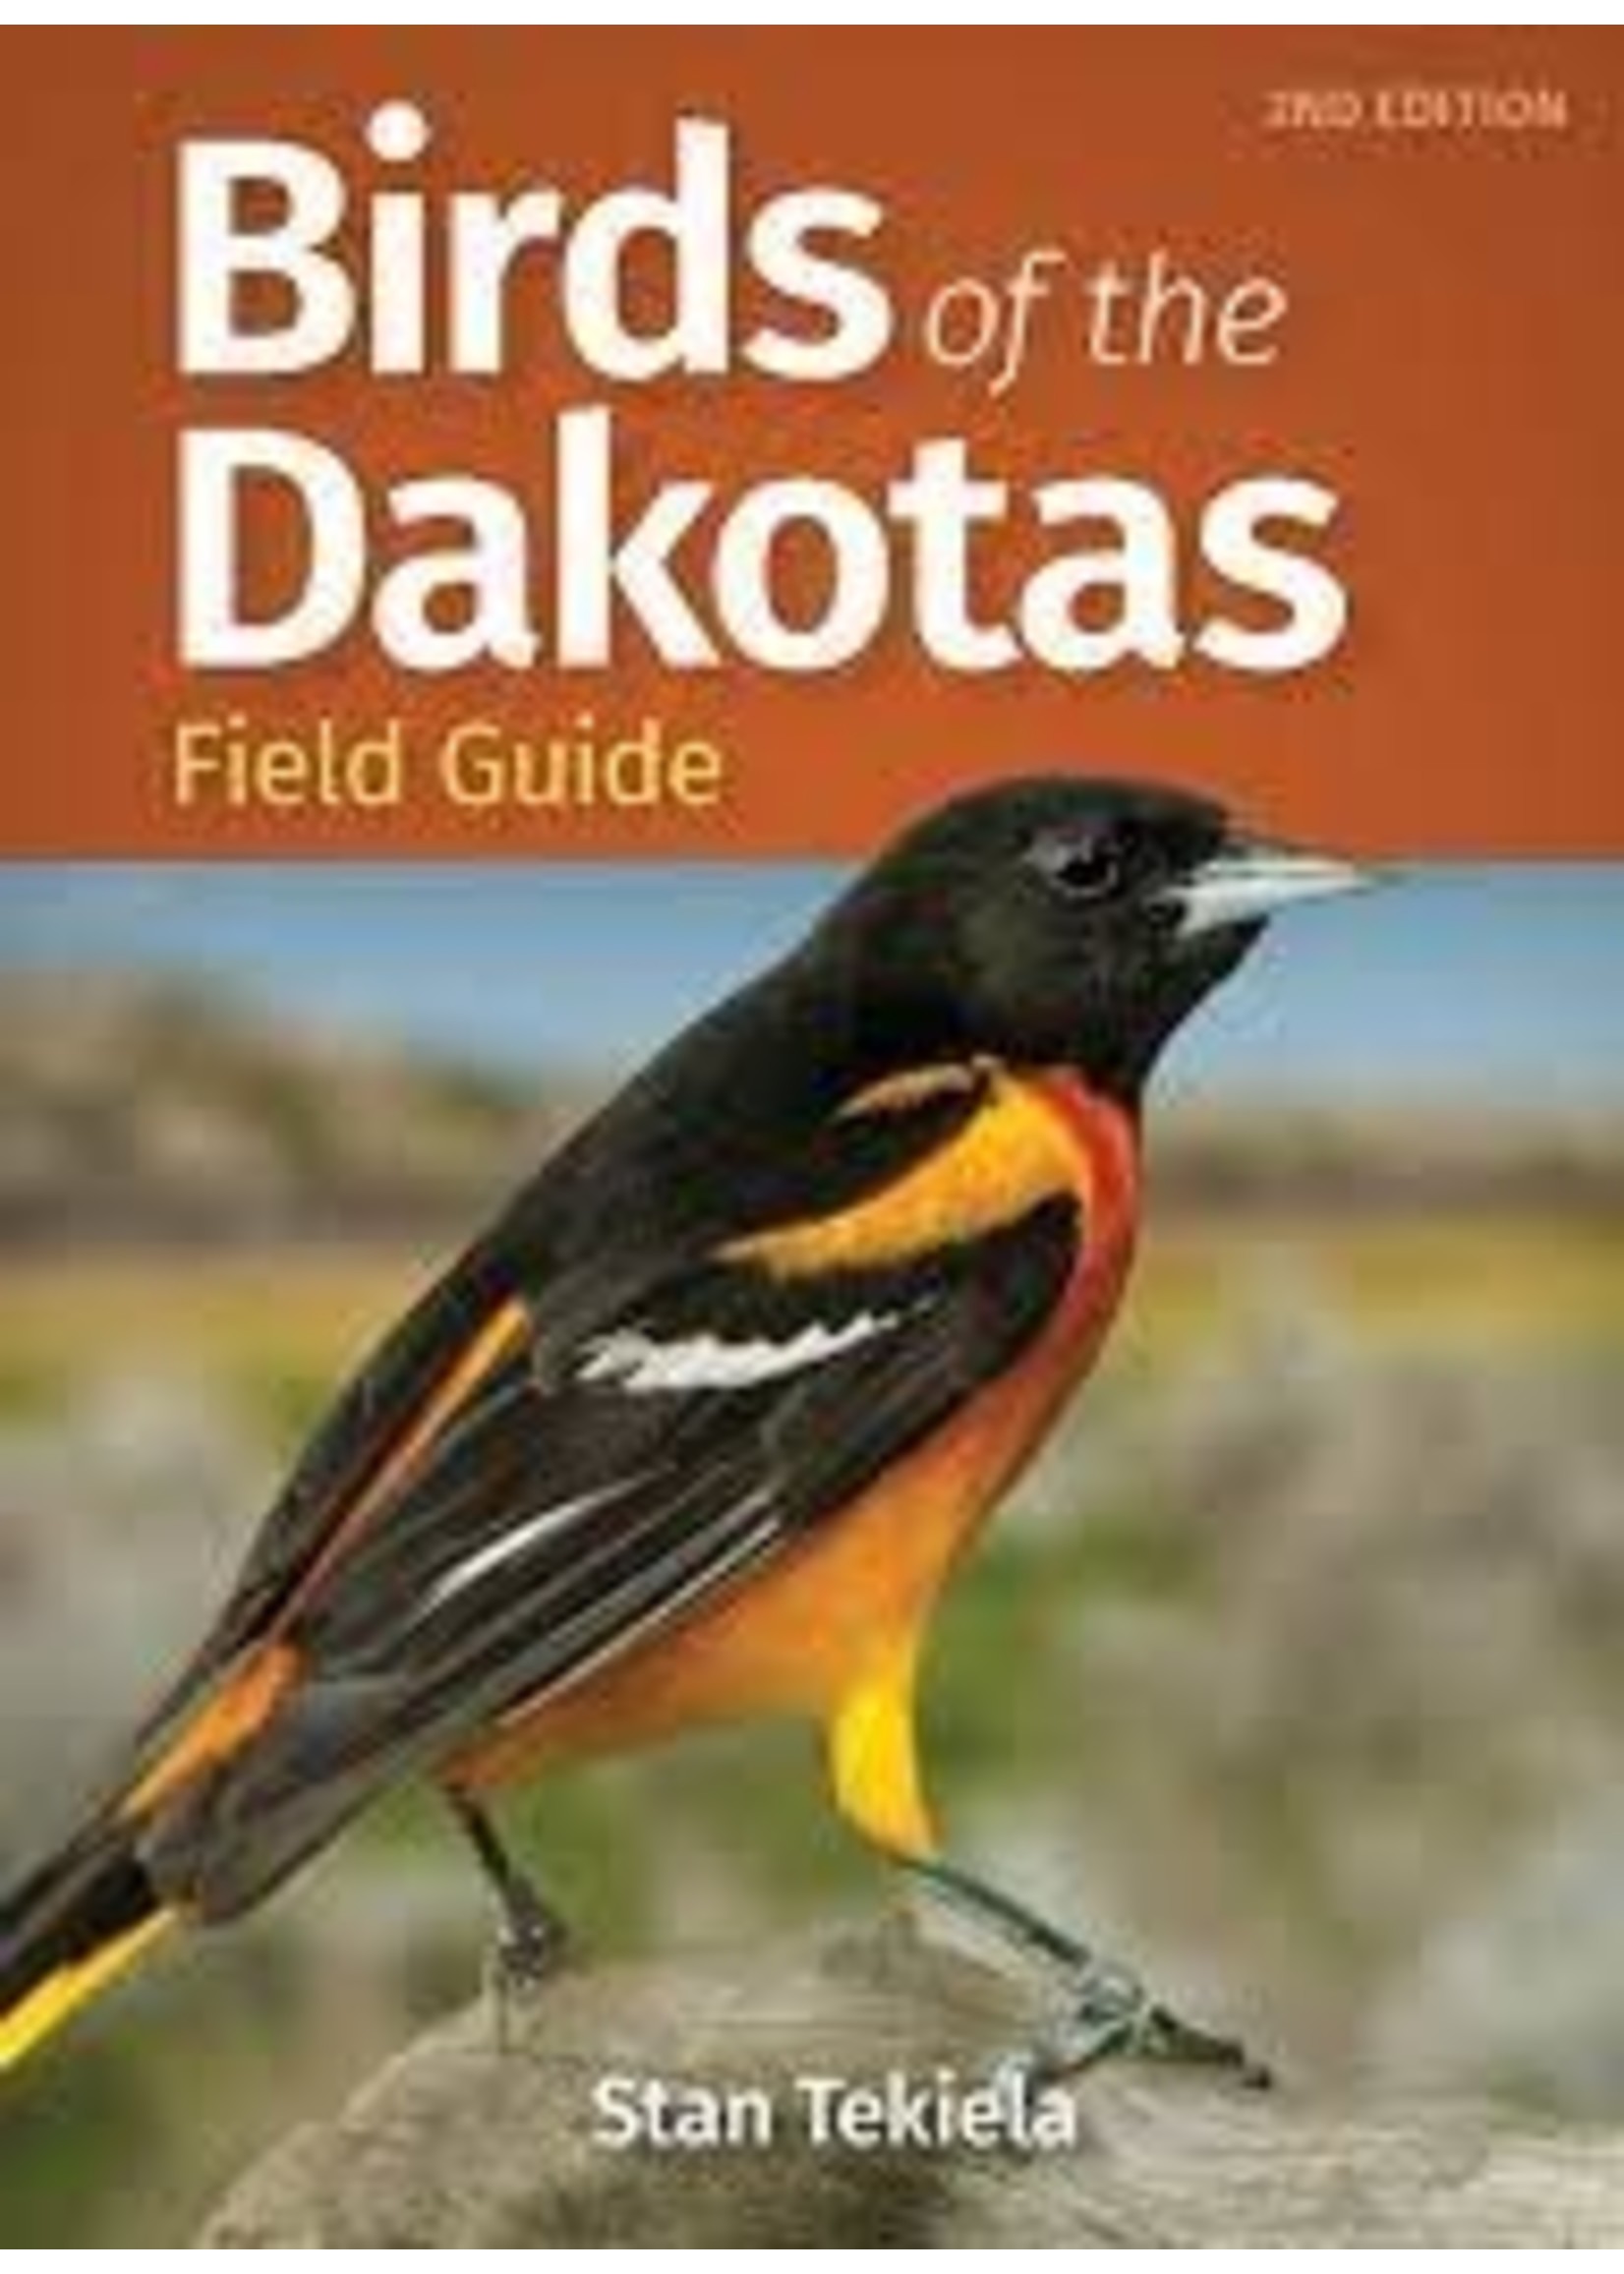 Birds of the Dakotas 2nd Edition